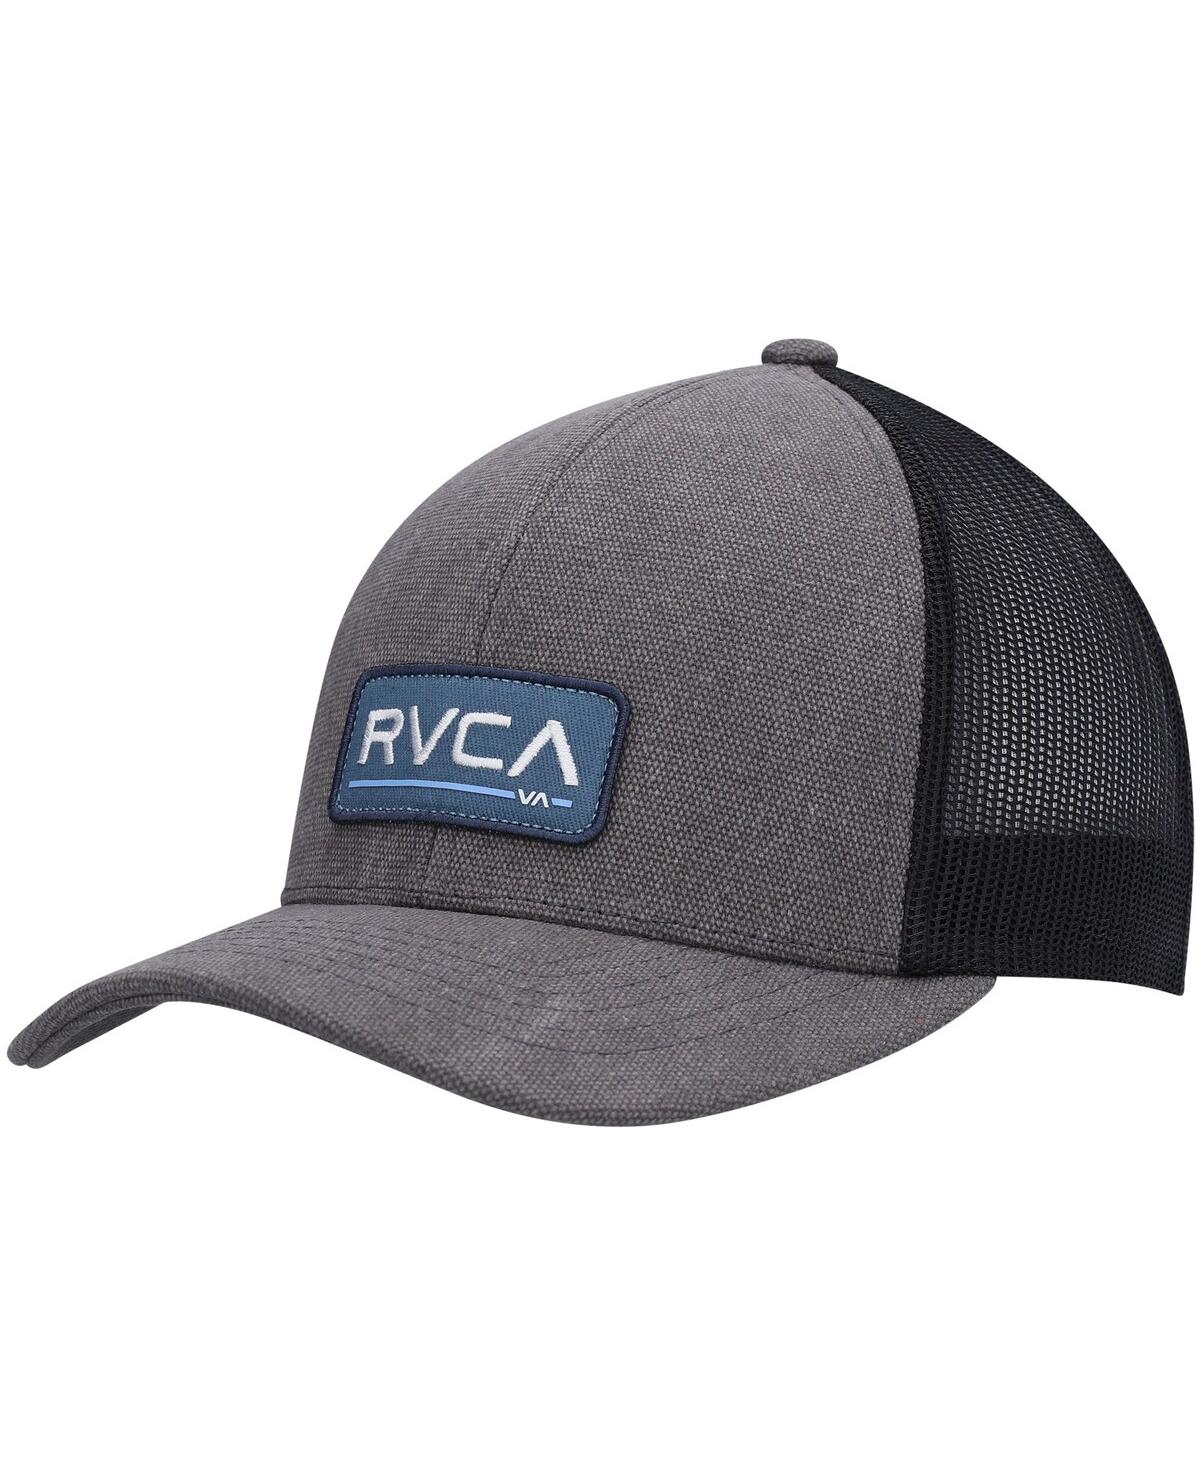 Rvca Men's  Charcoal Chg Ticket Iii Trucker Snapback Hat